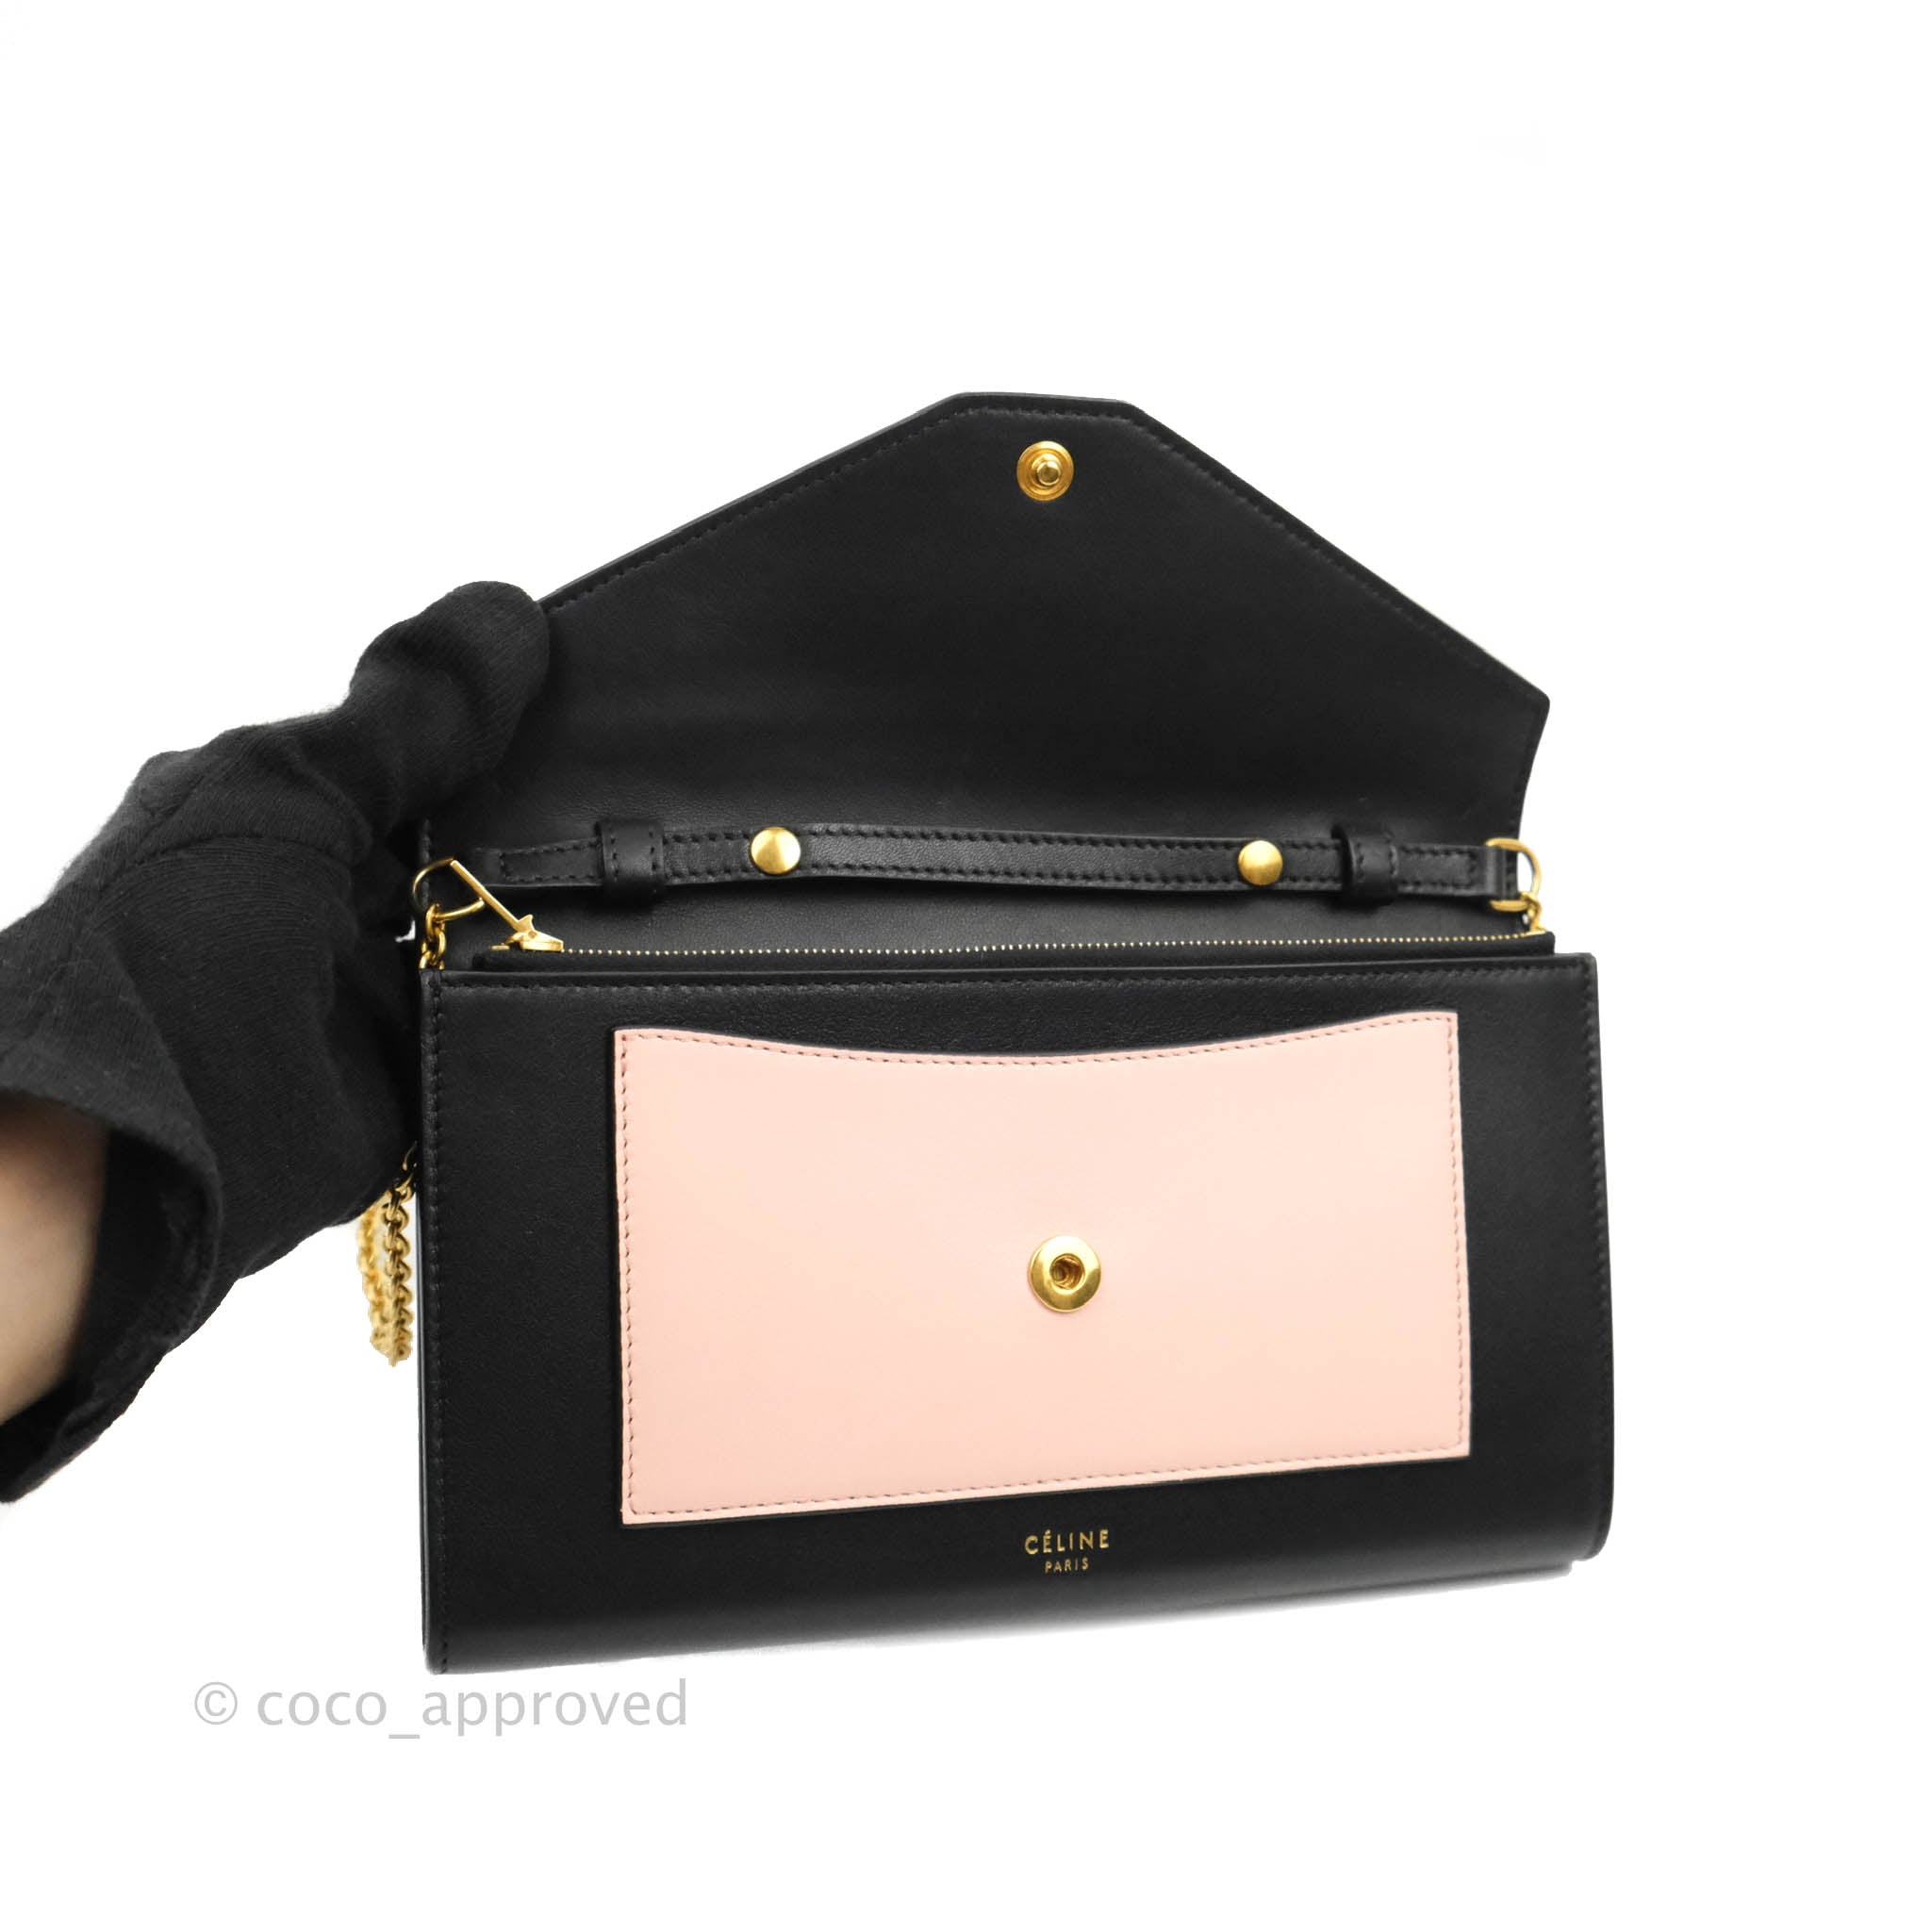 Celine Pocket Envelope Leather Wallet - Brown Wallets, Accessories